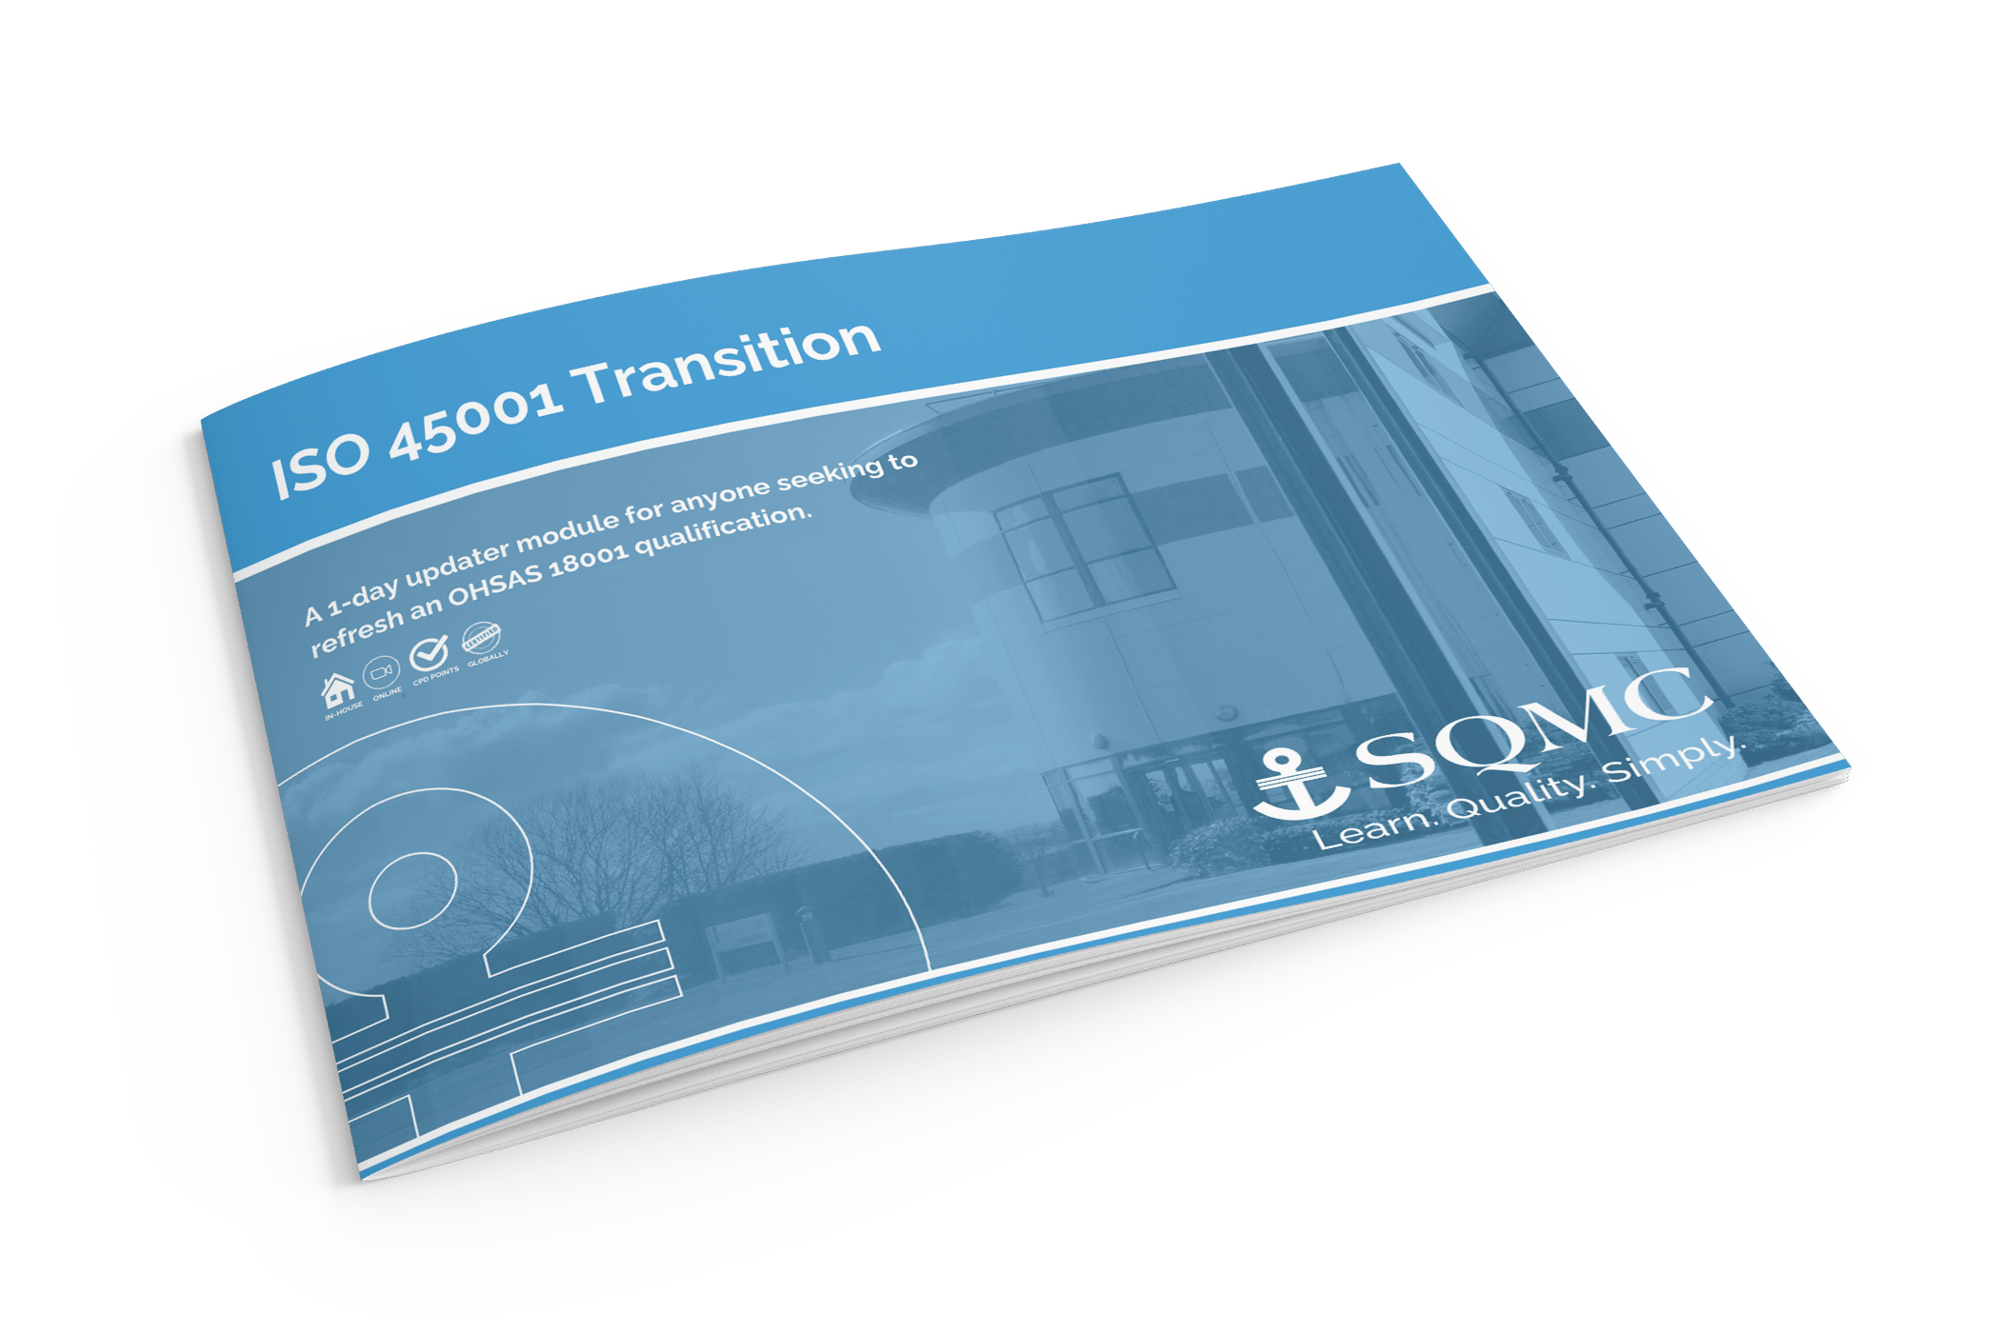 iso-45001-transition-syllabus